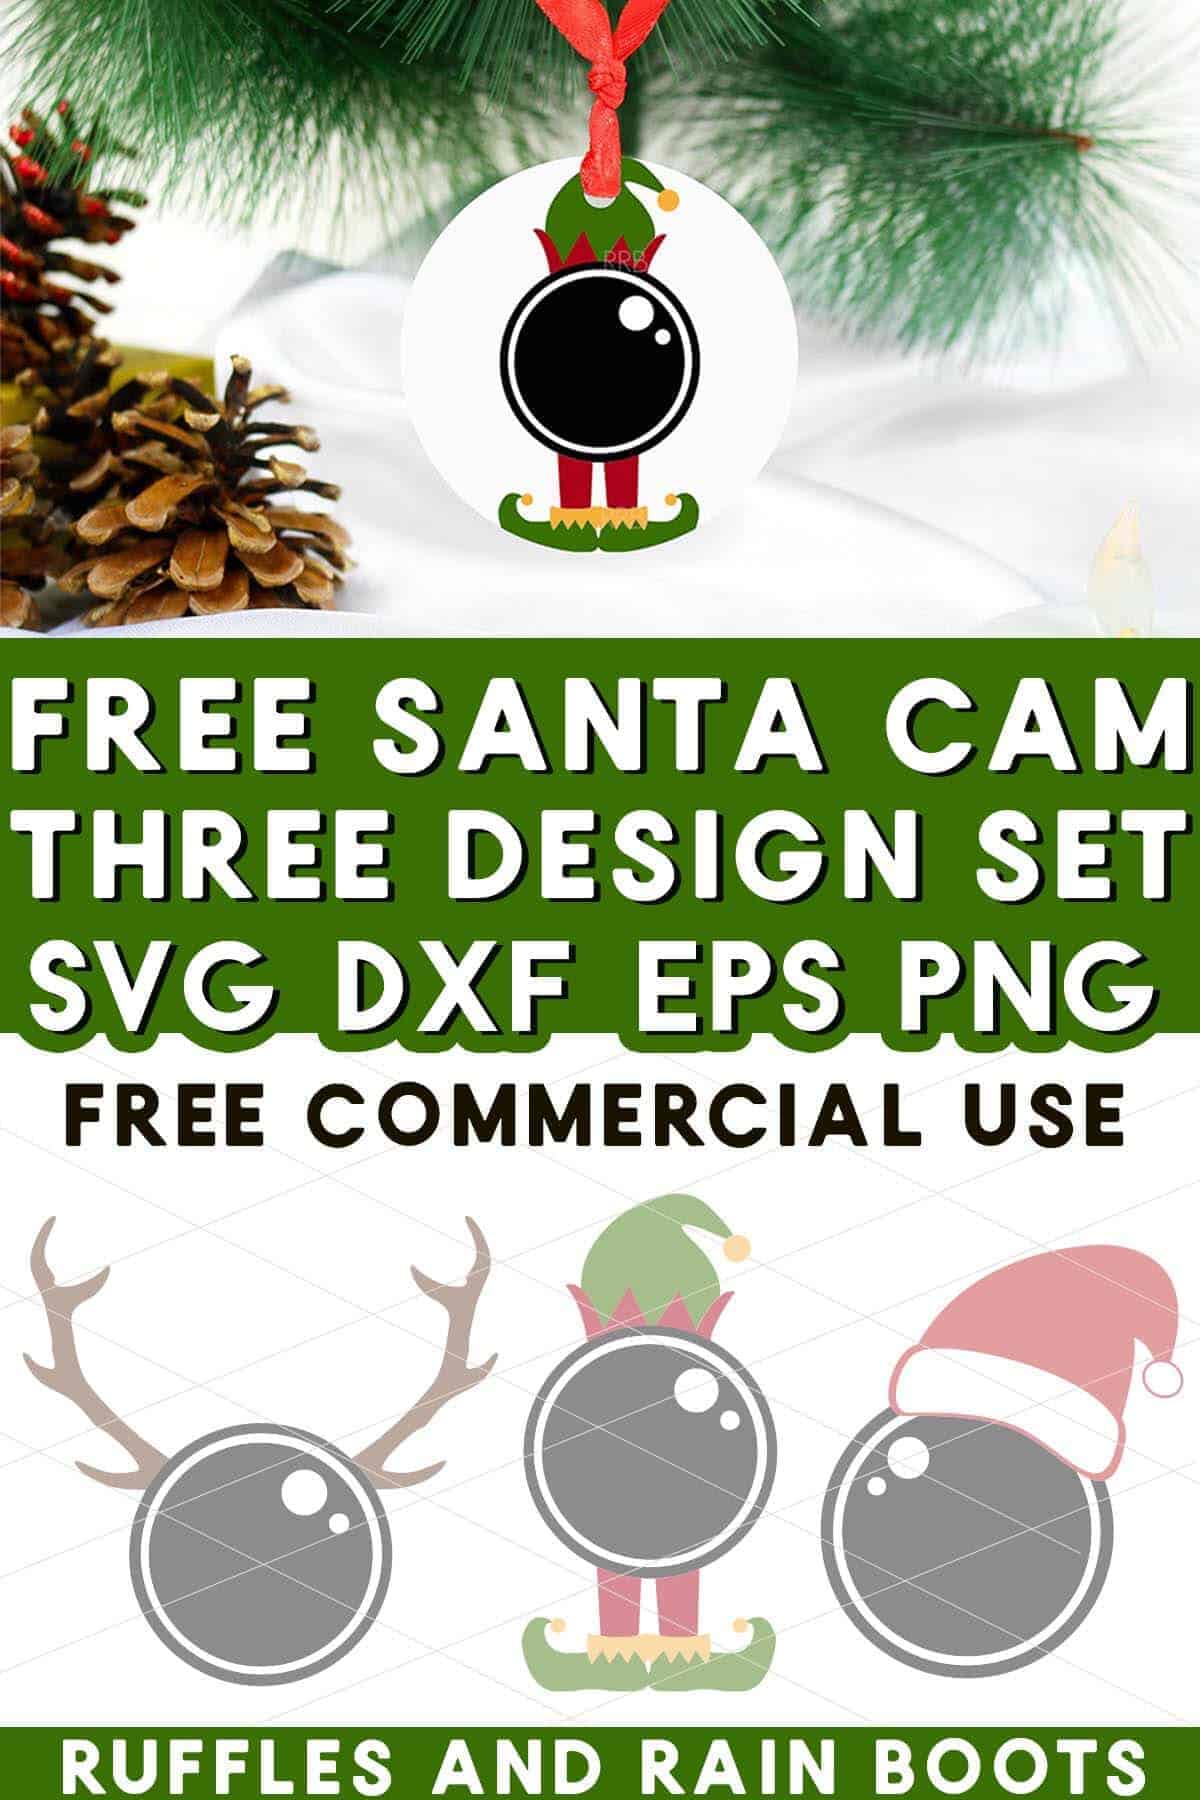 Split vertical image showing an elf cam ornament which reads free santa cam three design set SVG.